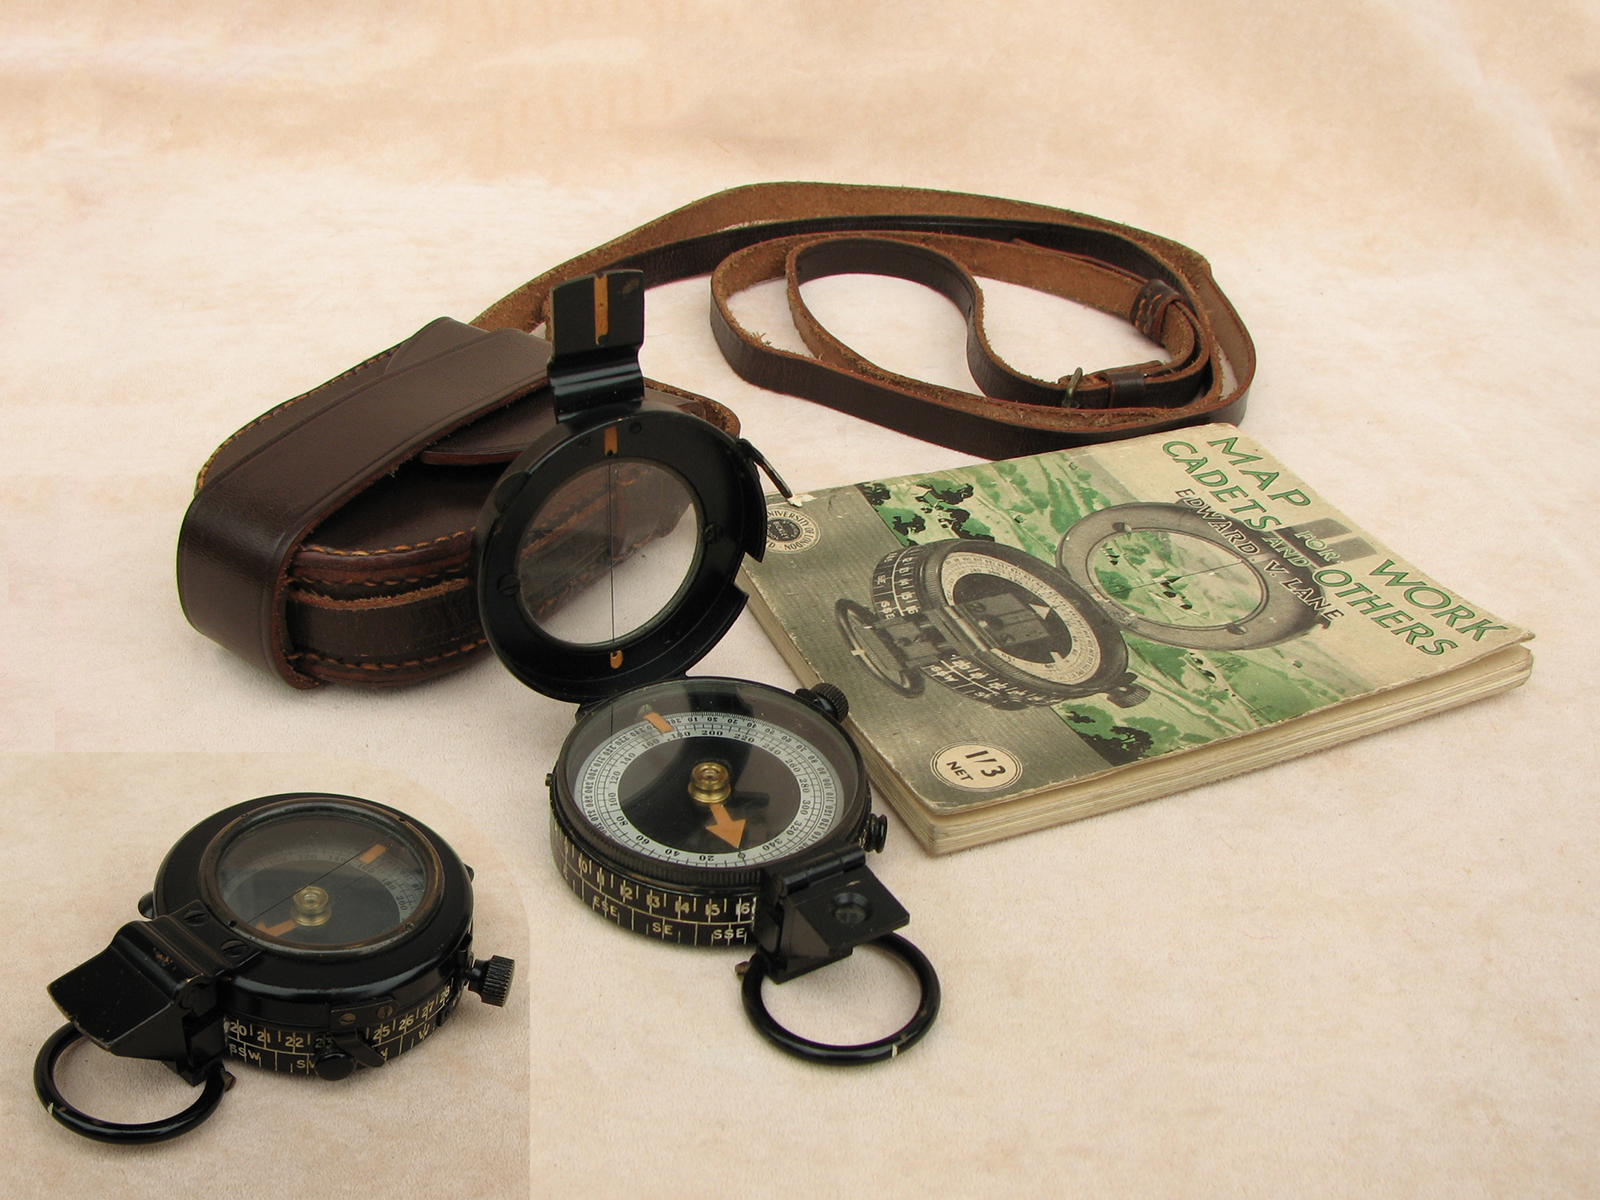 WW2 era MK IX prismatic marching compass with cadet handbook